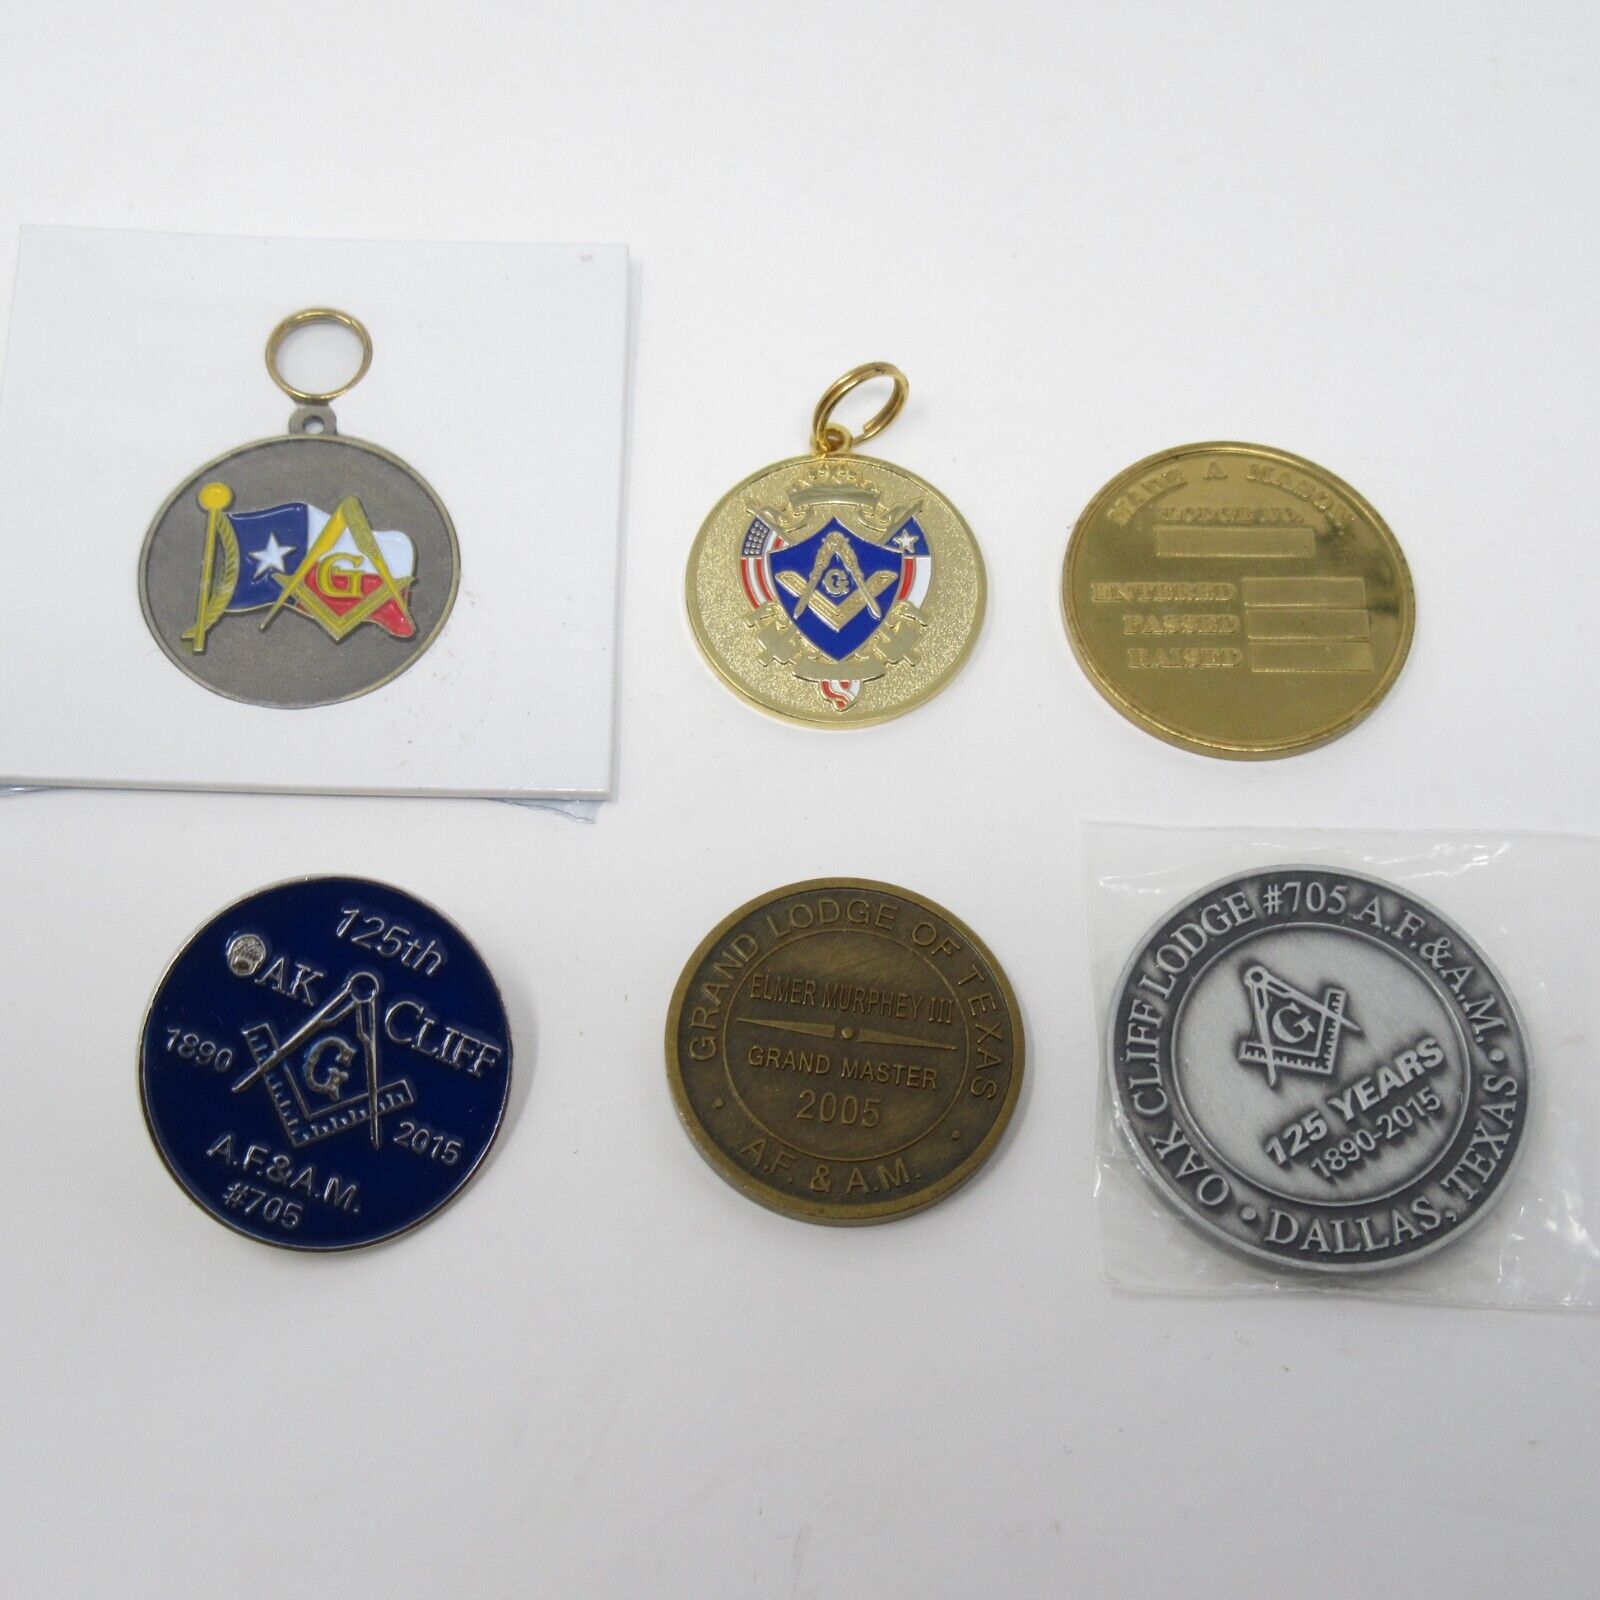 Lot of 6 Free Masons Masonic Lodge Coins Tokens Pins Texas #705 Oak Cliff